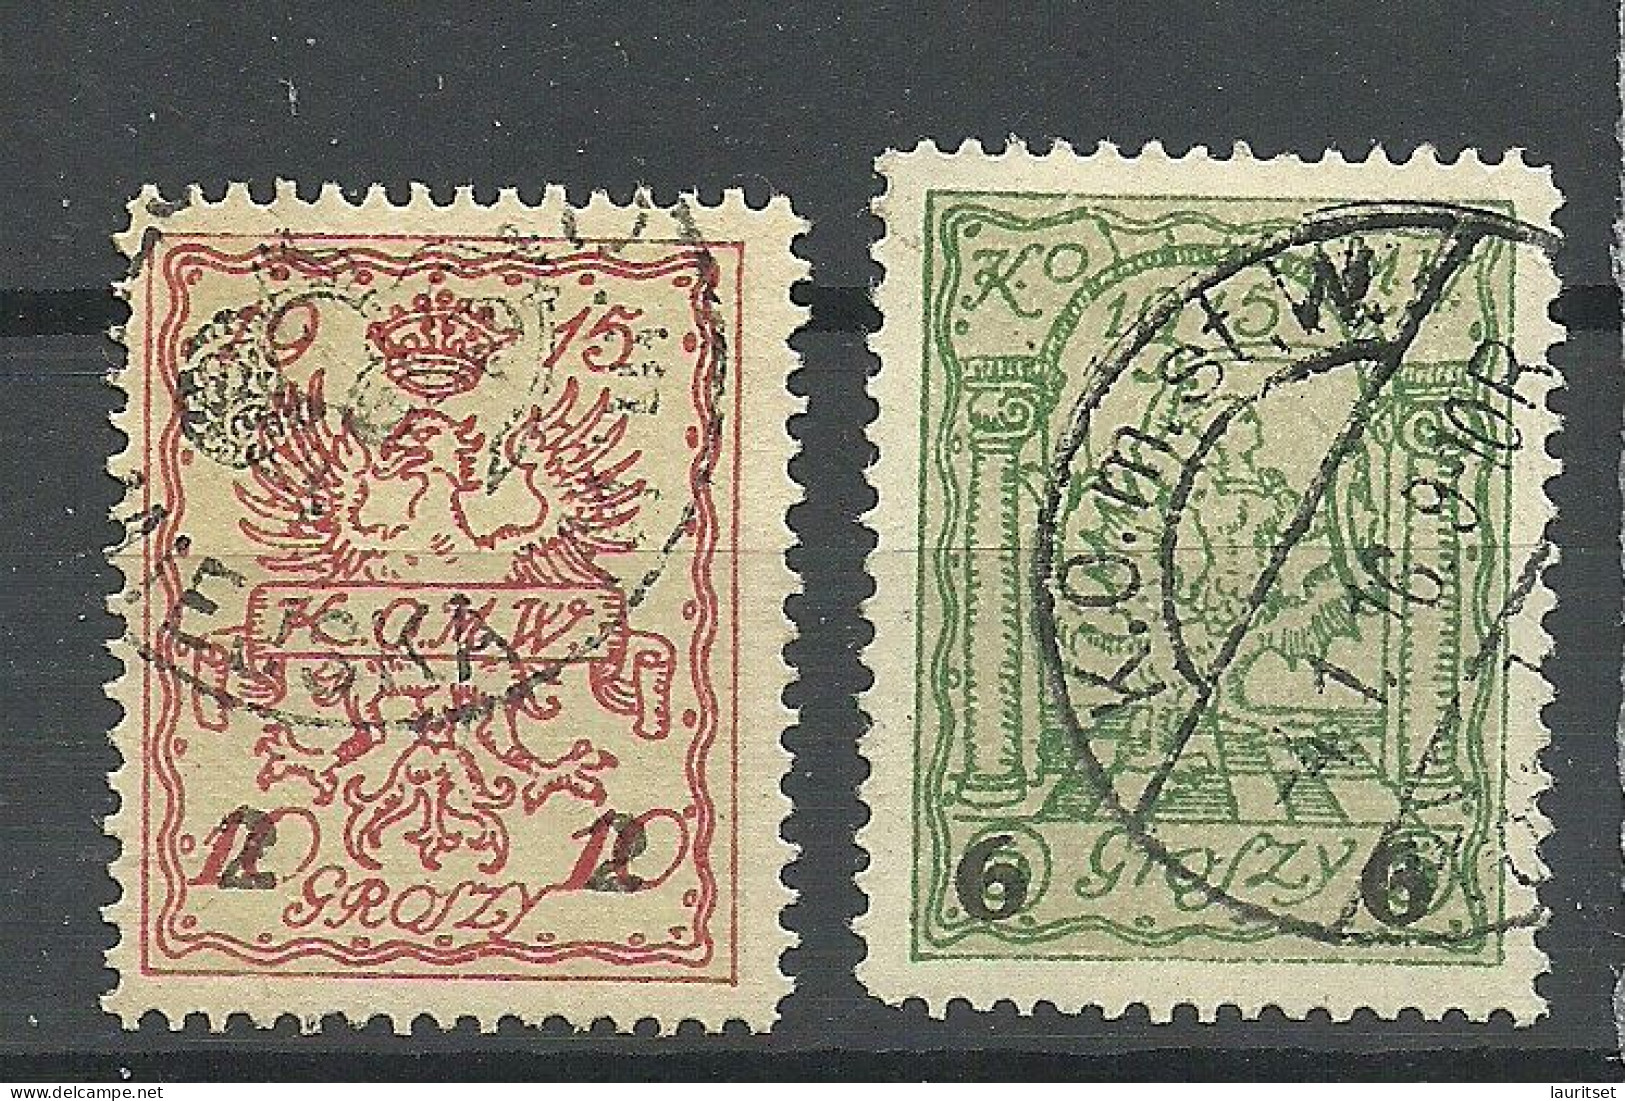 POLEN Poland 1915 Stadtpost Warschau Local City Post Michel 7 - 8 O - Used Stamps